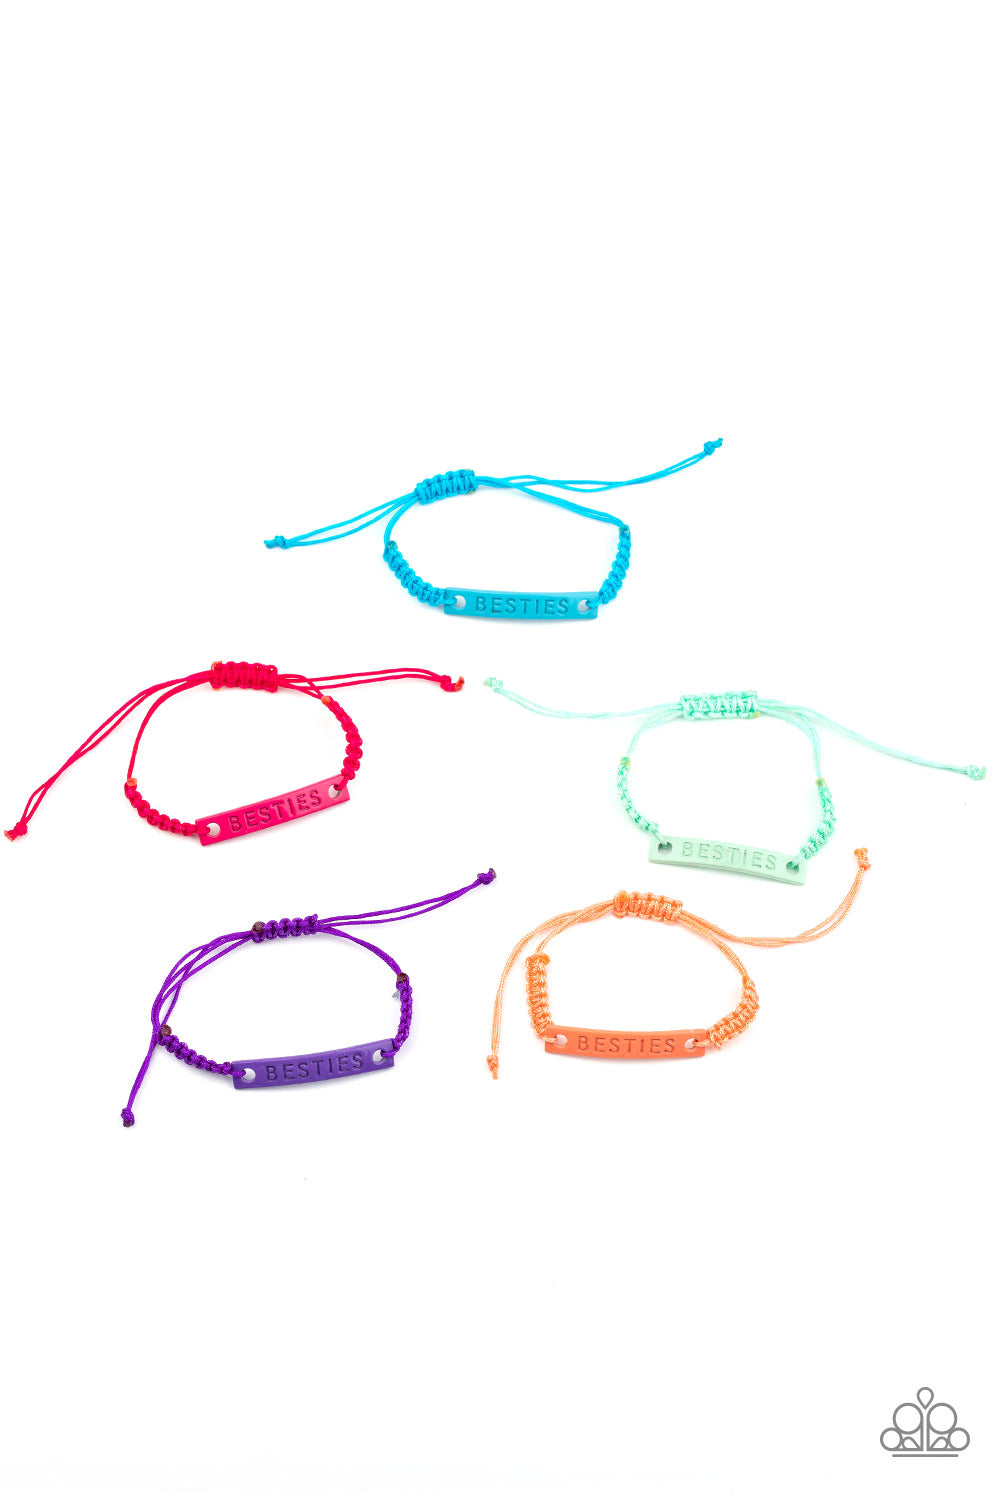 Starlet Shimmer BESTIES Bracelet Kit - The V Resale Boutique